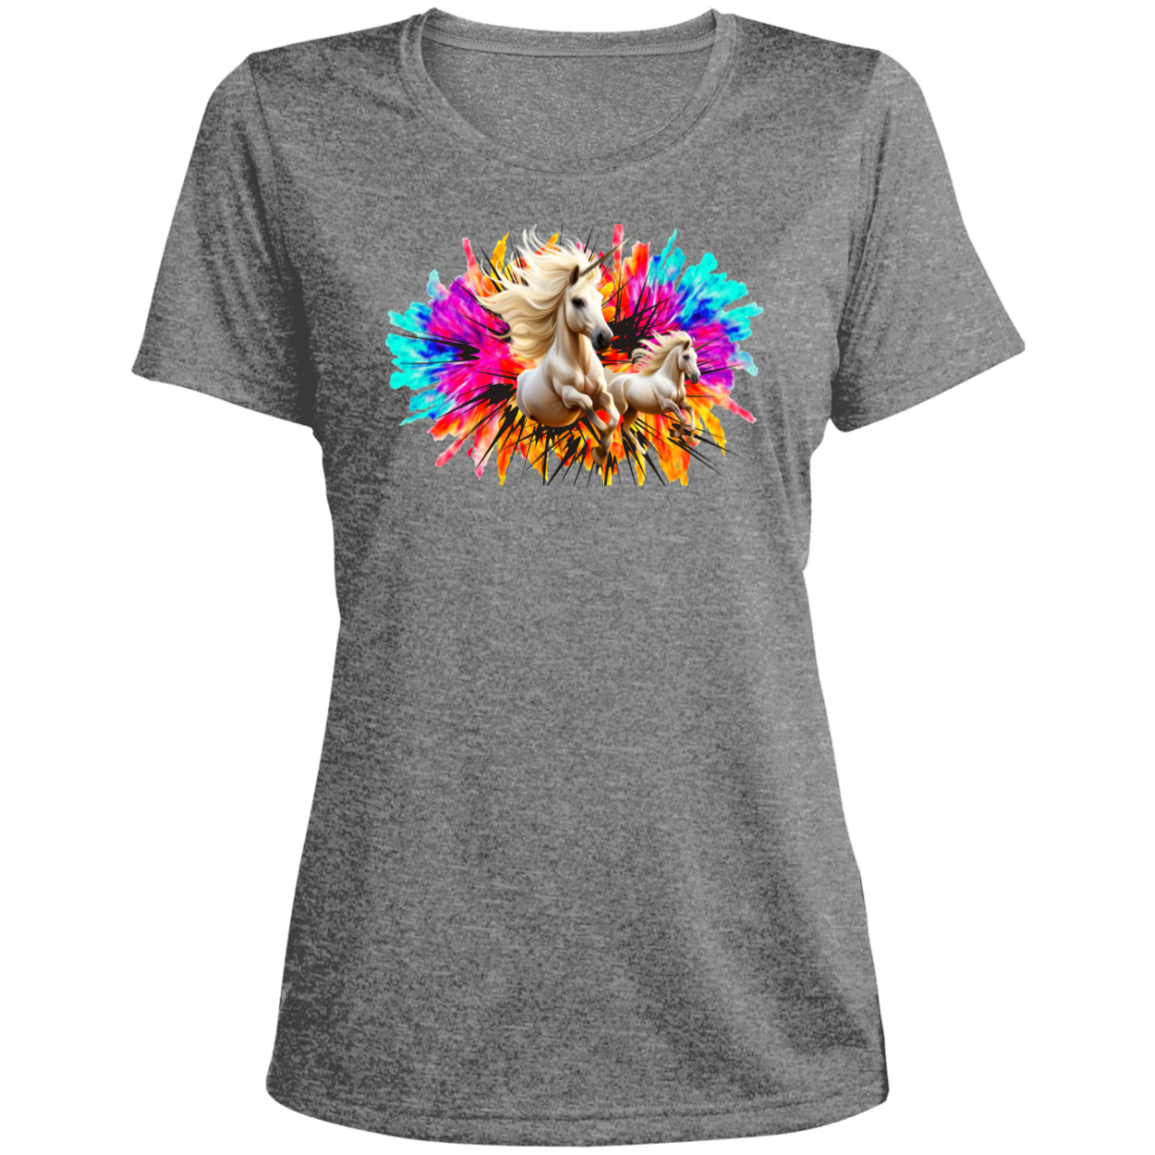 Unicorn Burst Women's Colorful T-Shirt